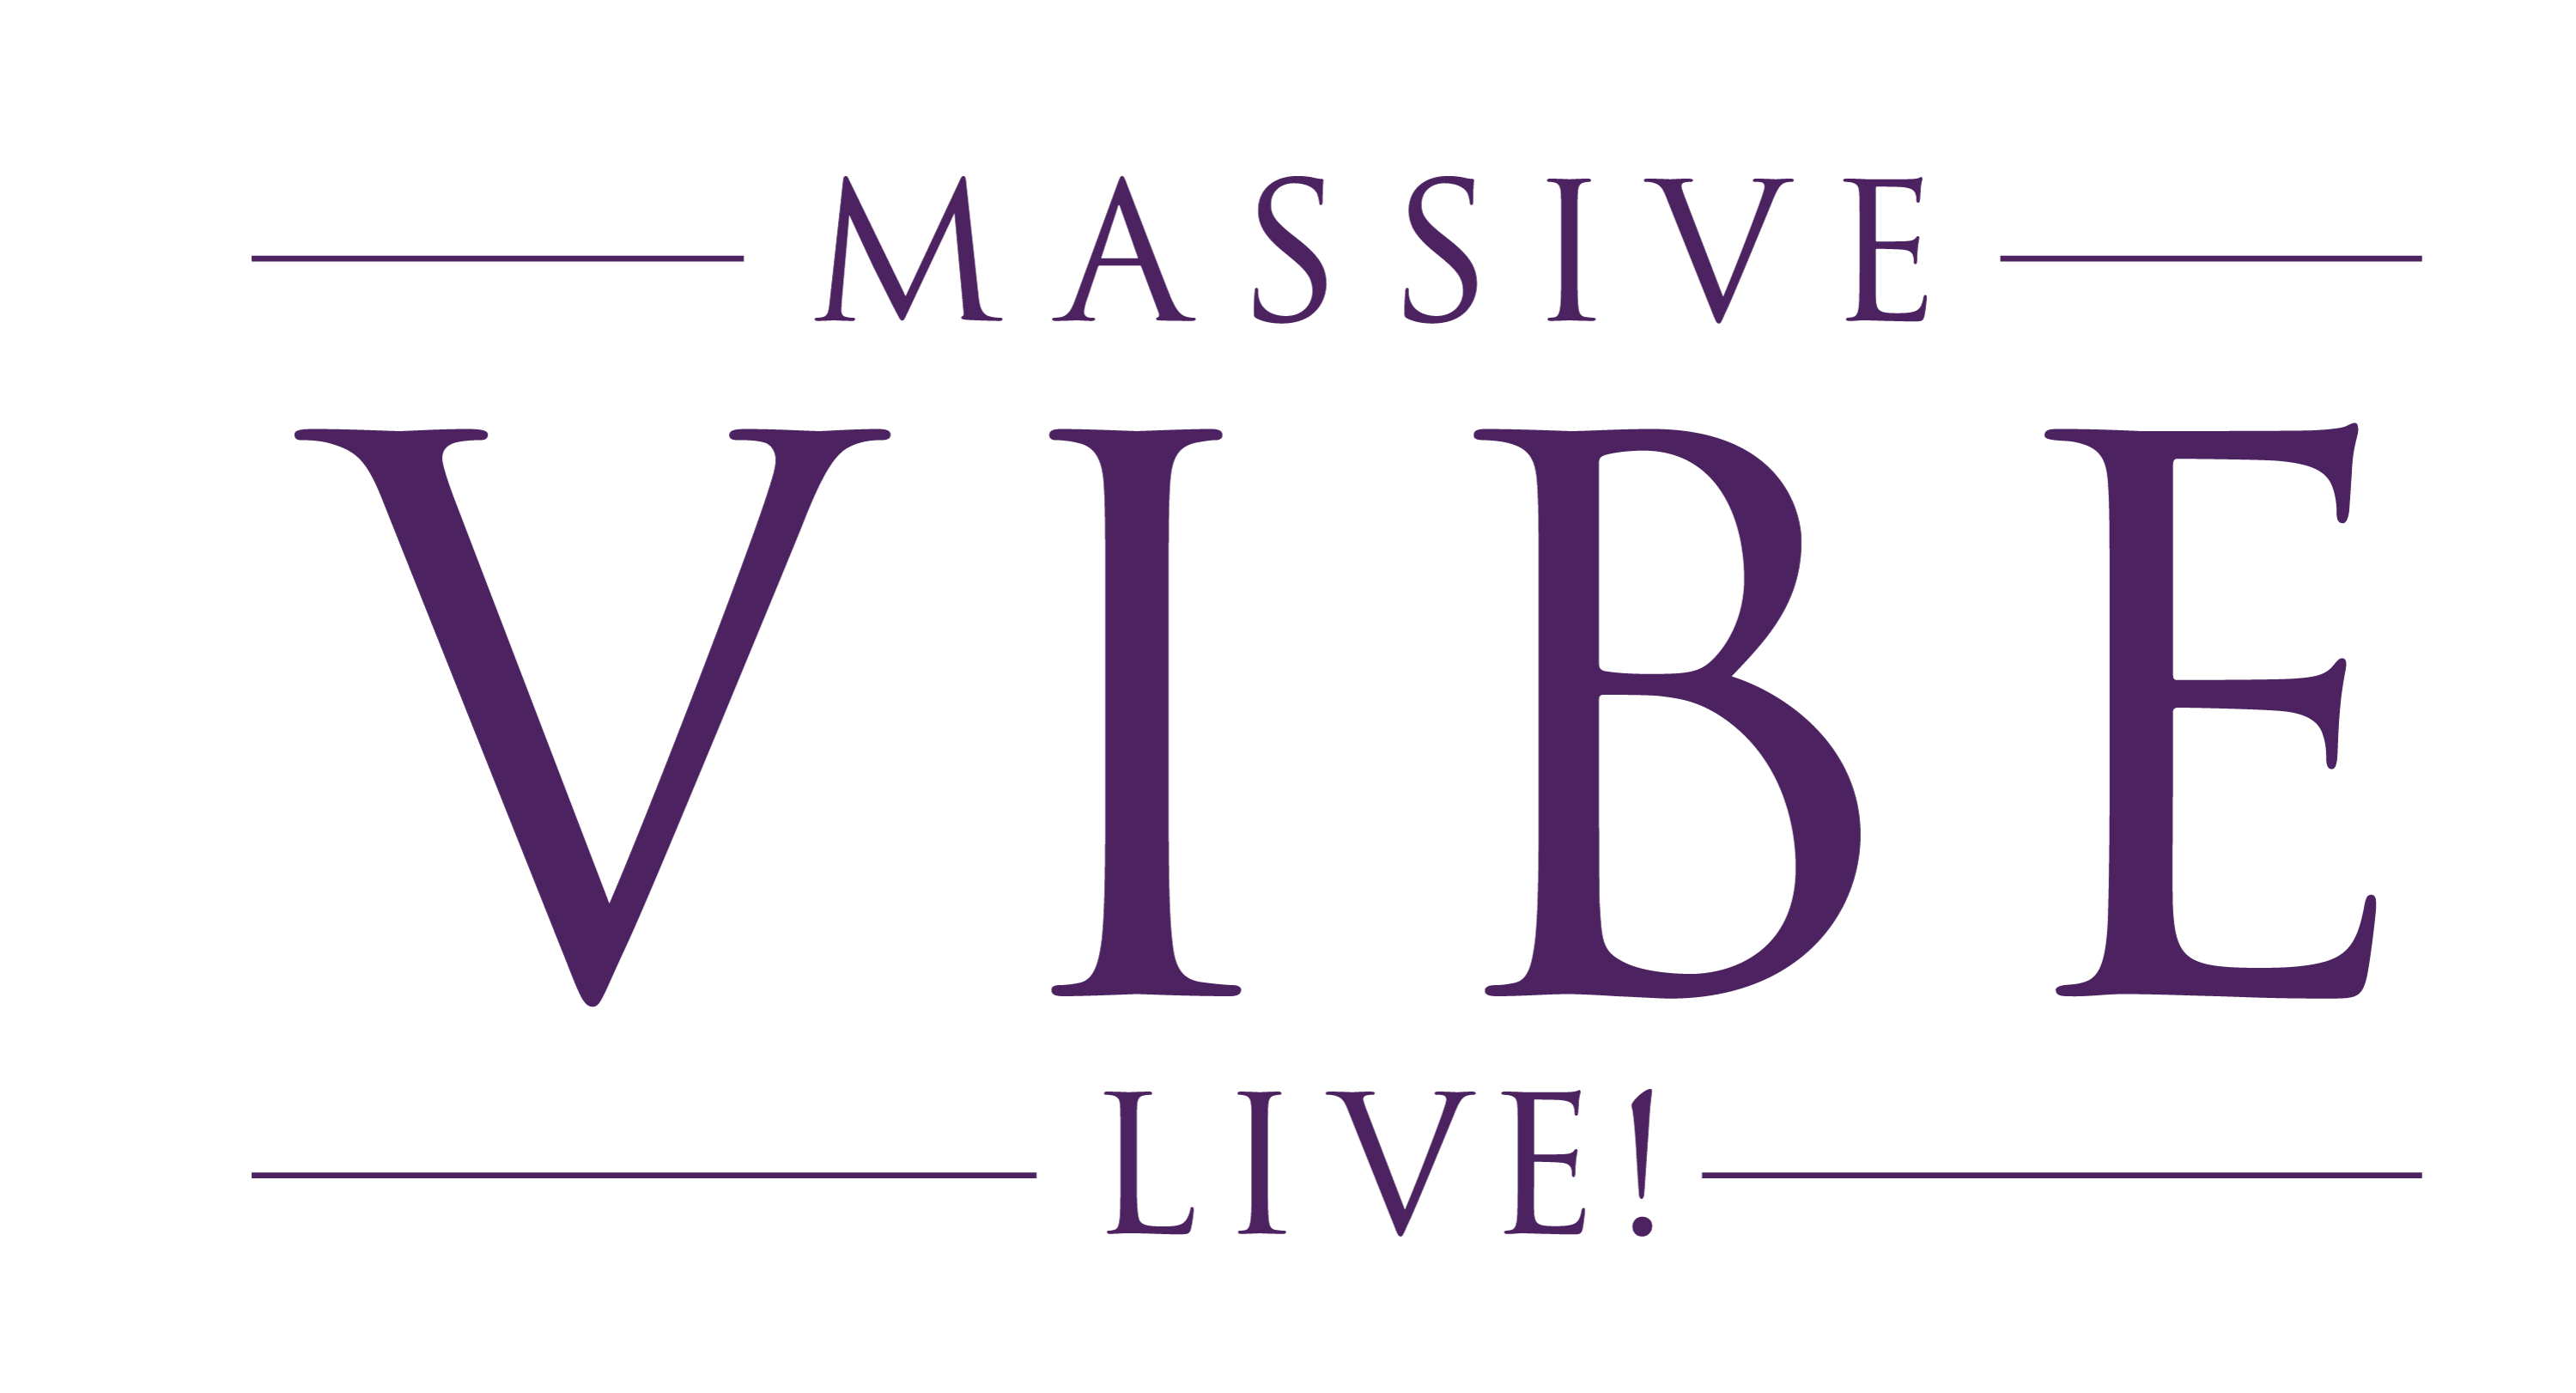 Massive Vibe Live!